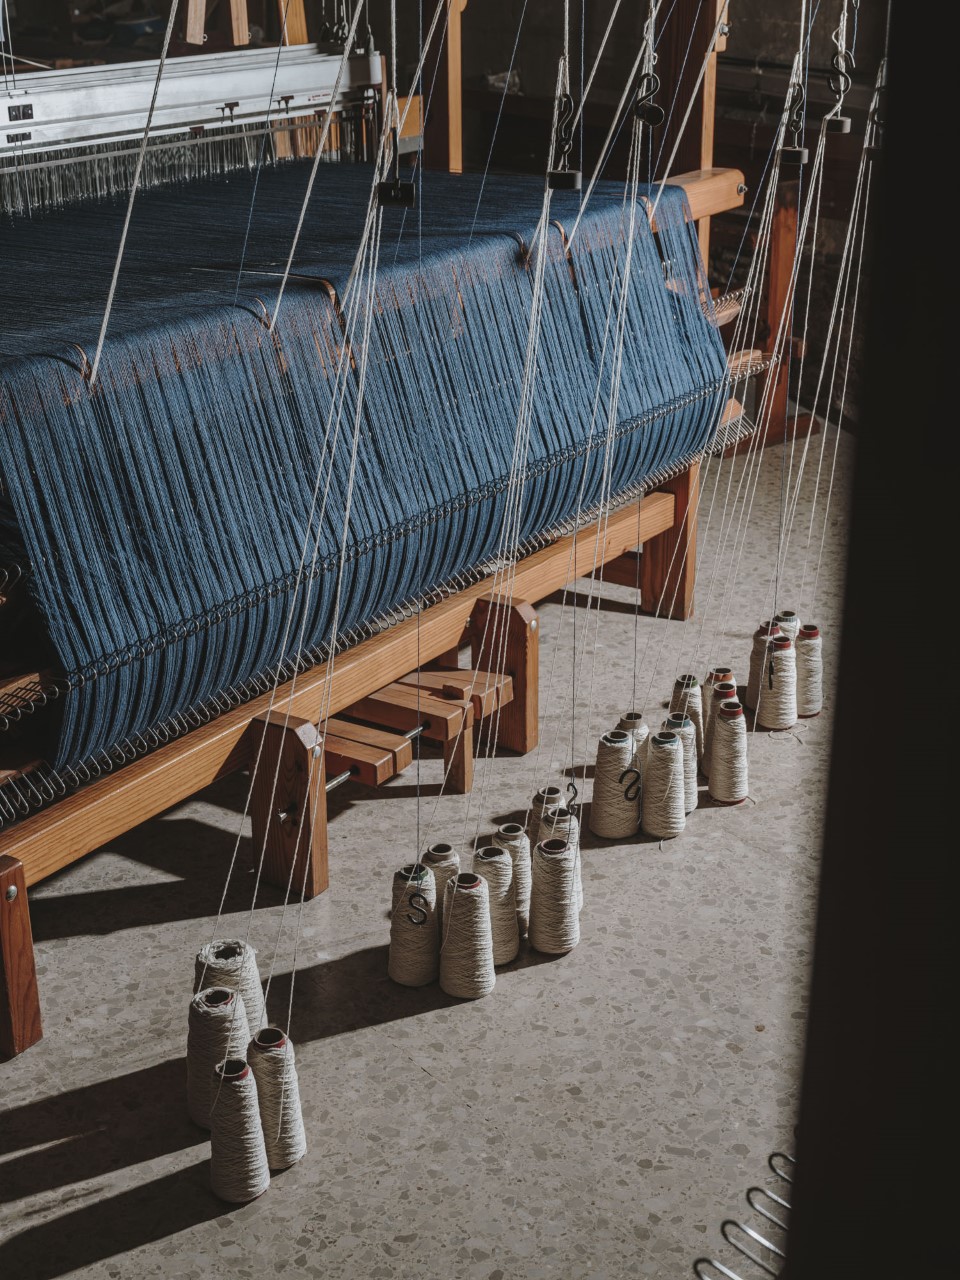 Telar manual de madera preparado para tejer en el taller de teixidors